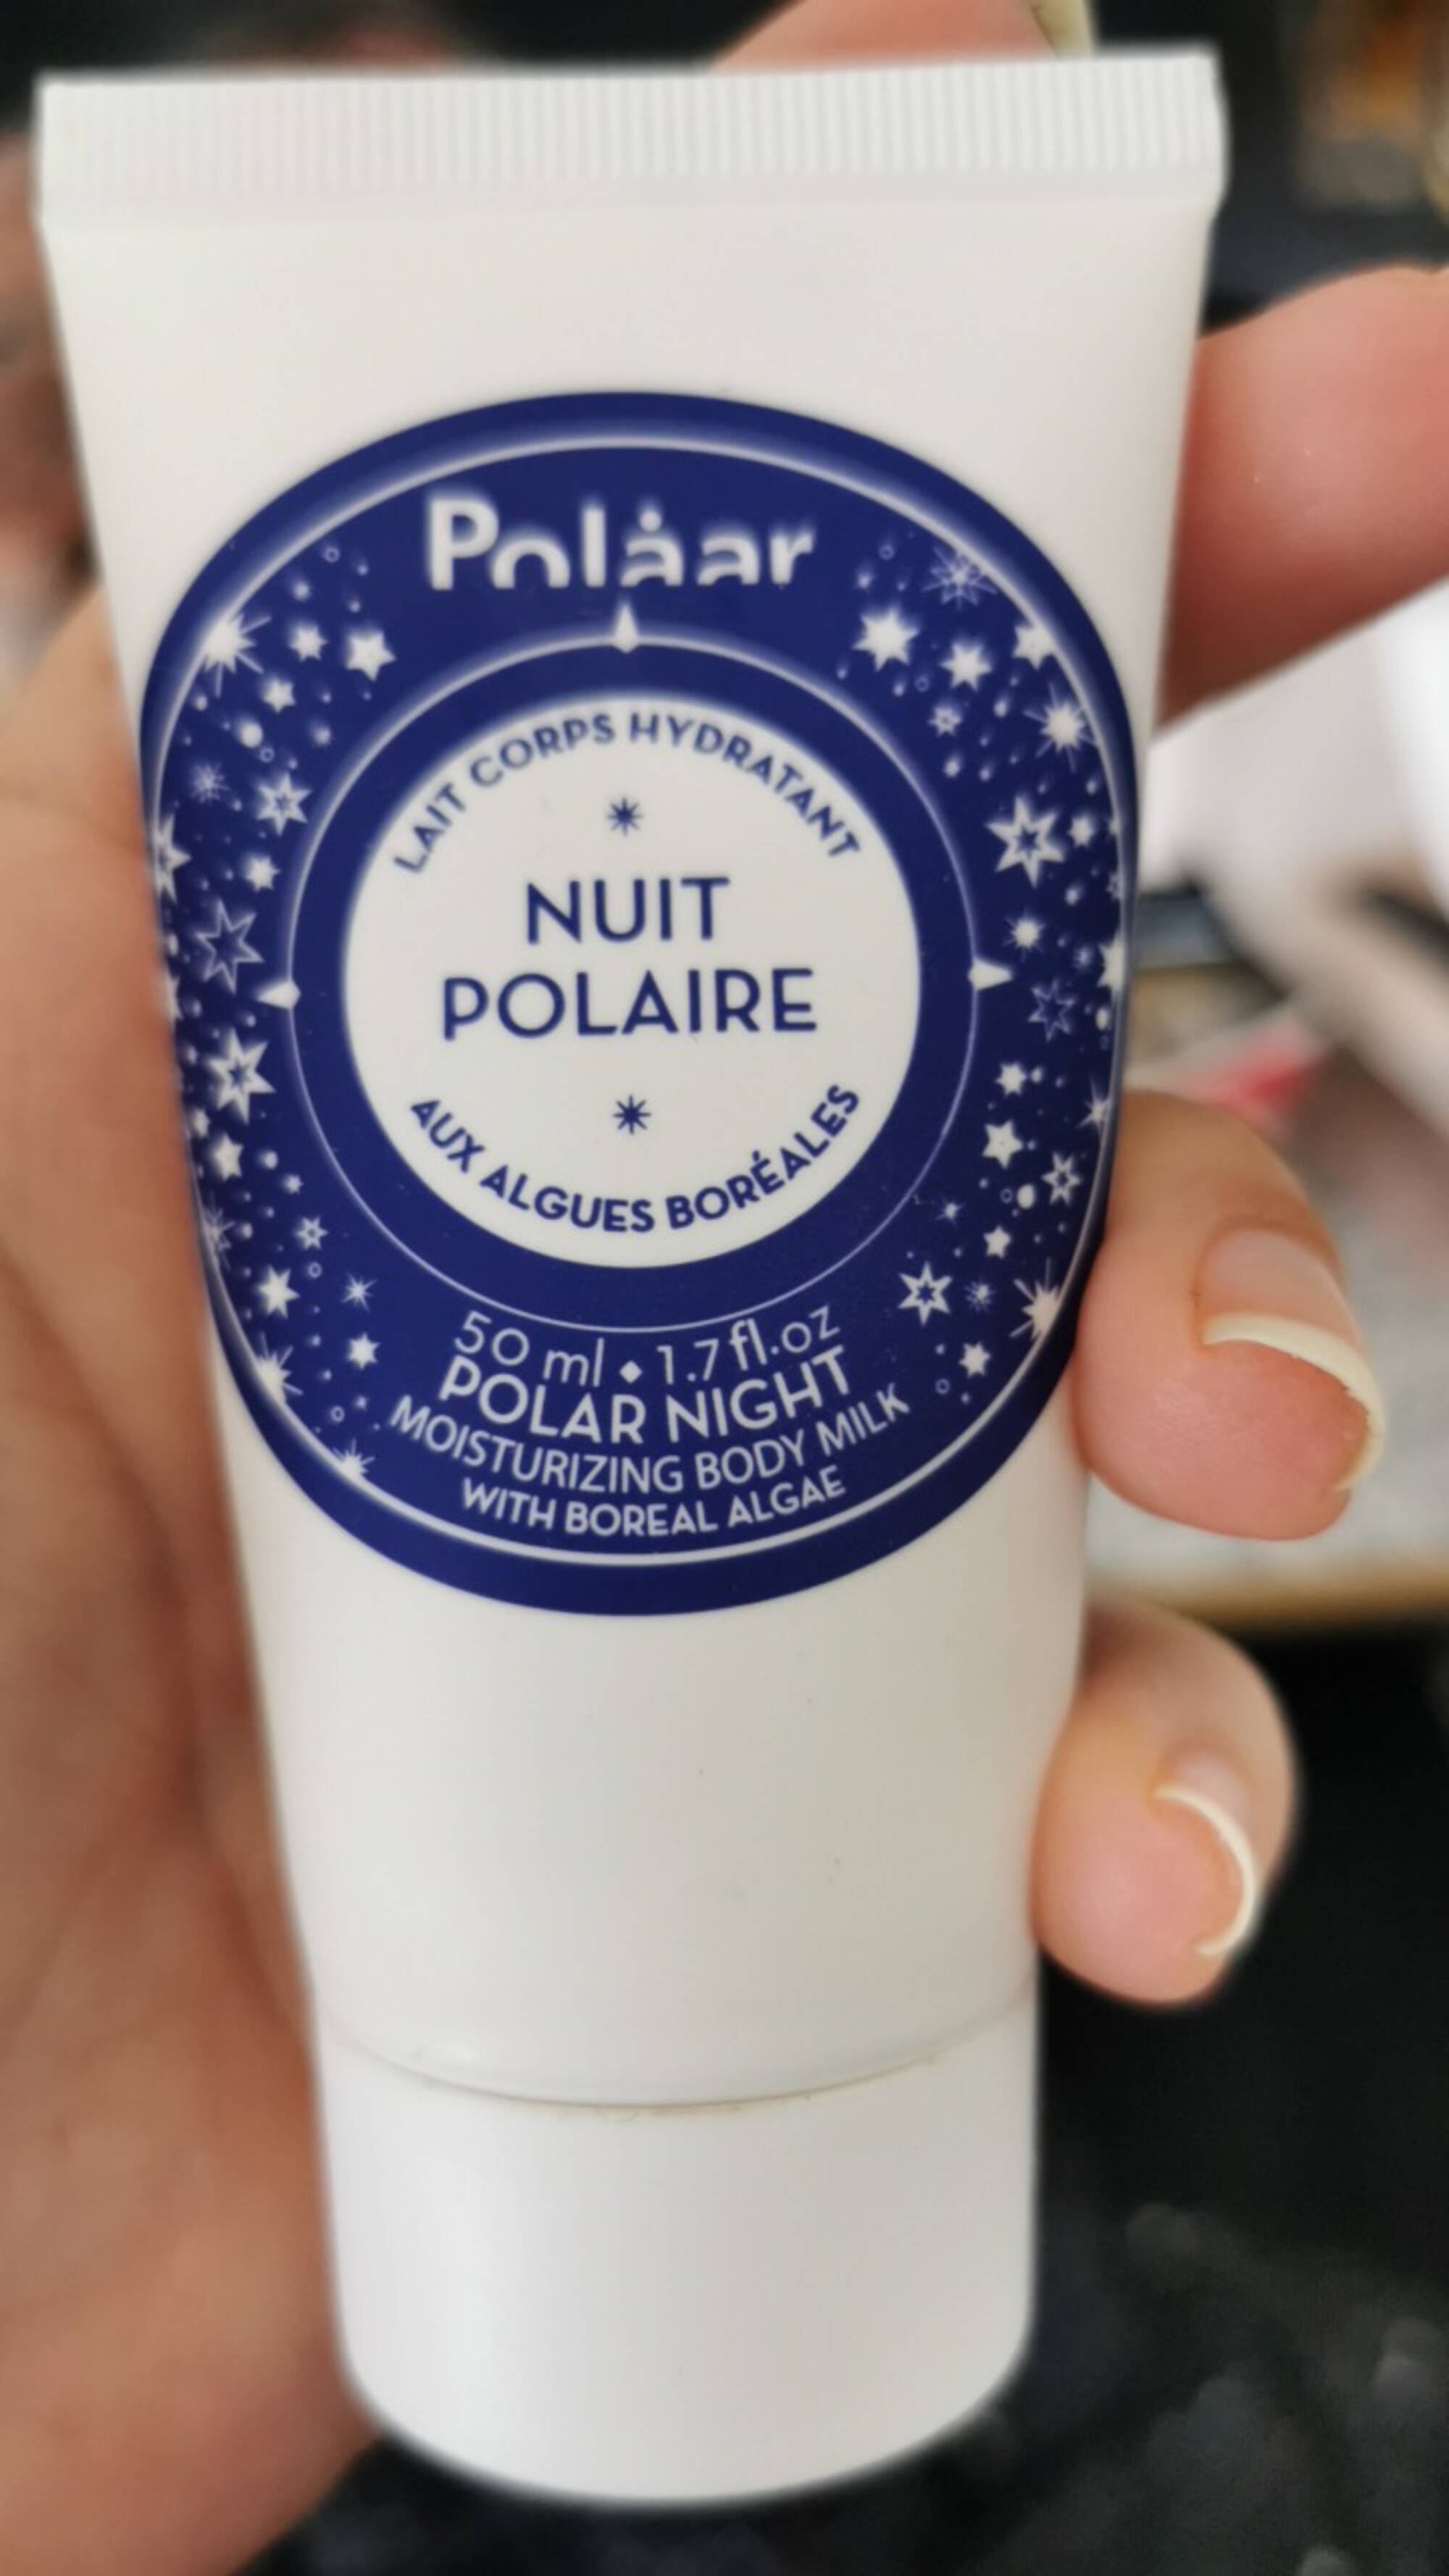 POLAAR - Nuit polaire - Lait corps hydratant